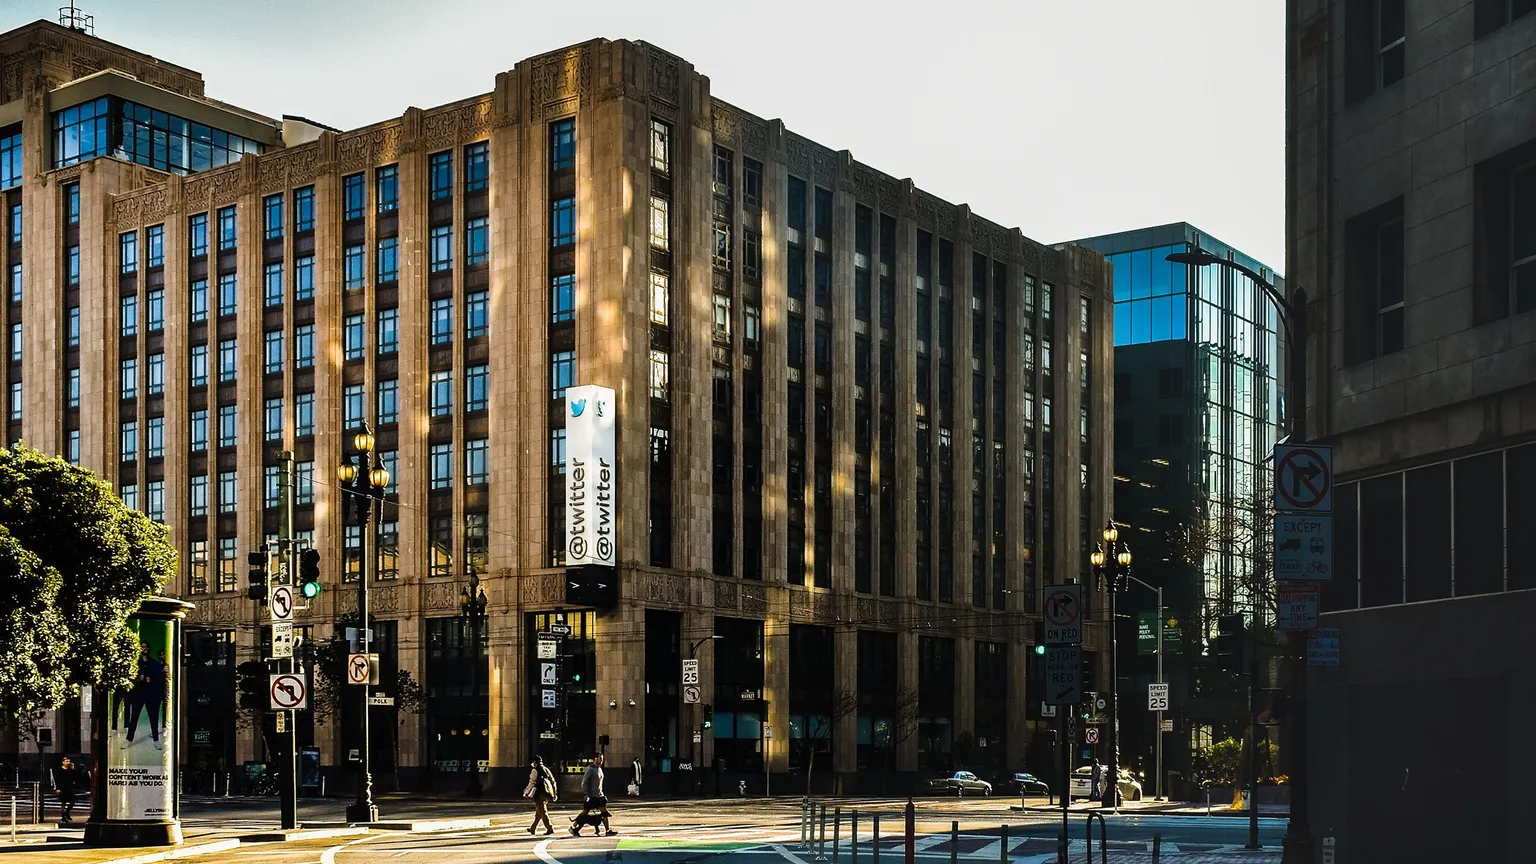 Twitter's San Francisco Headquarters on Market Street in San Francisco in 2022. Image: Takako Phillips/Shutterstock